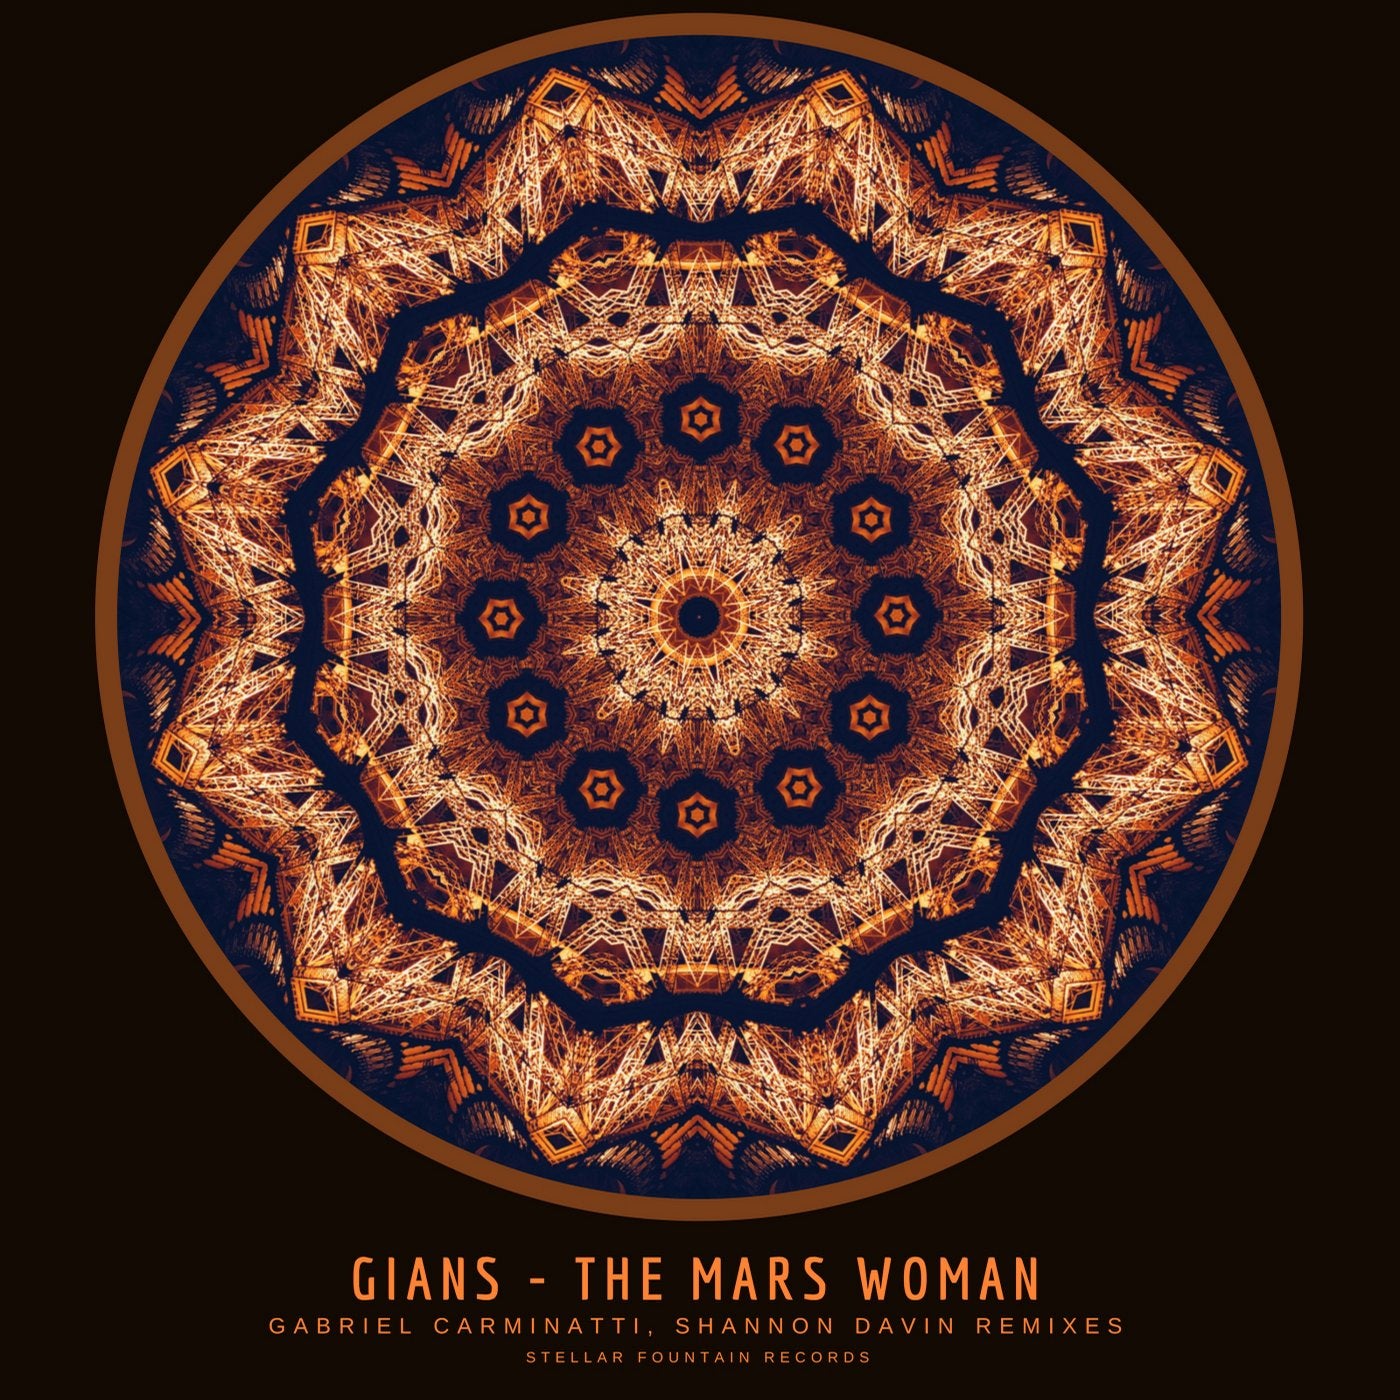 The Mars Woman